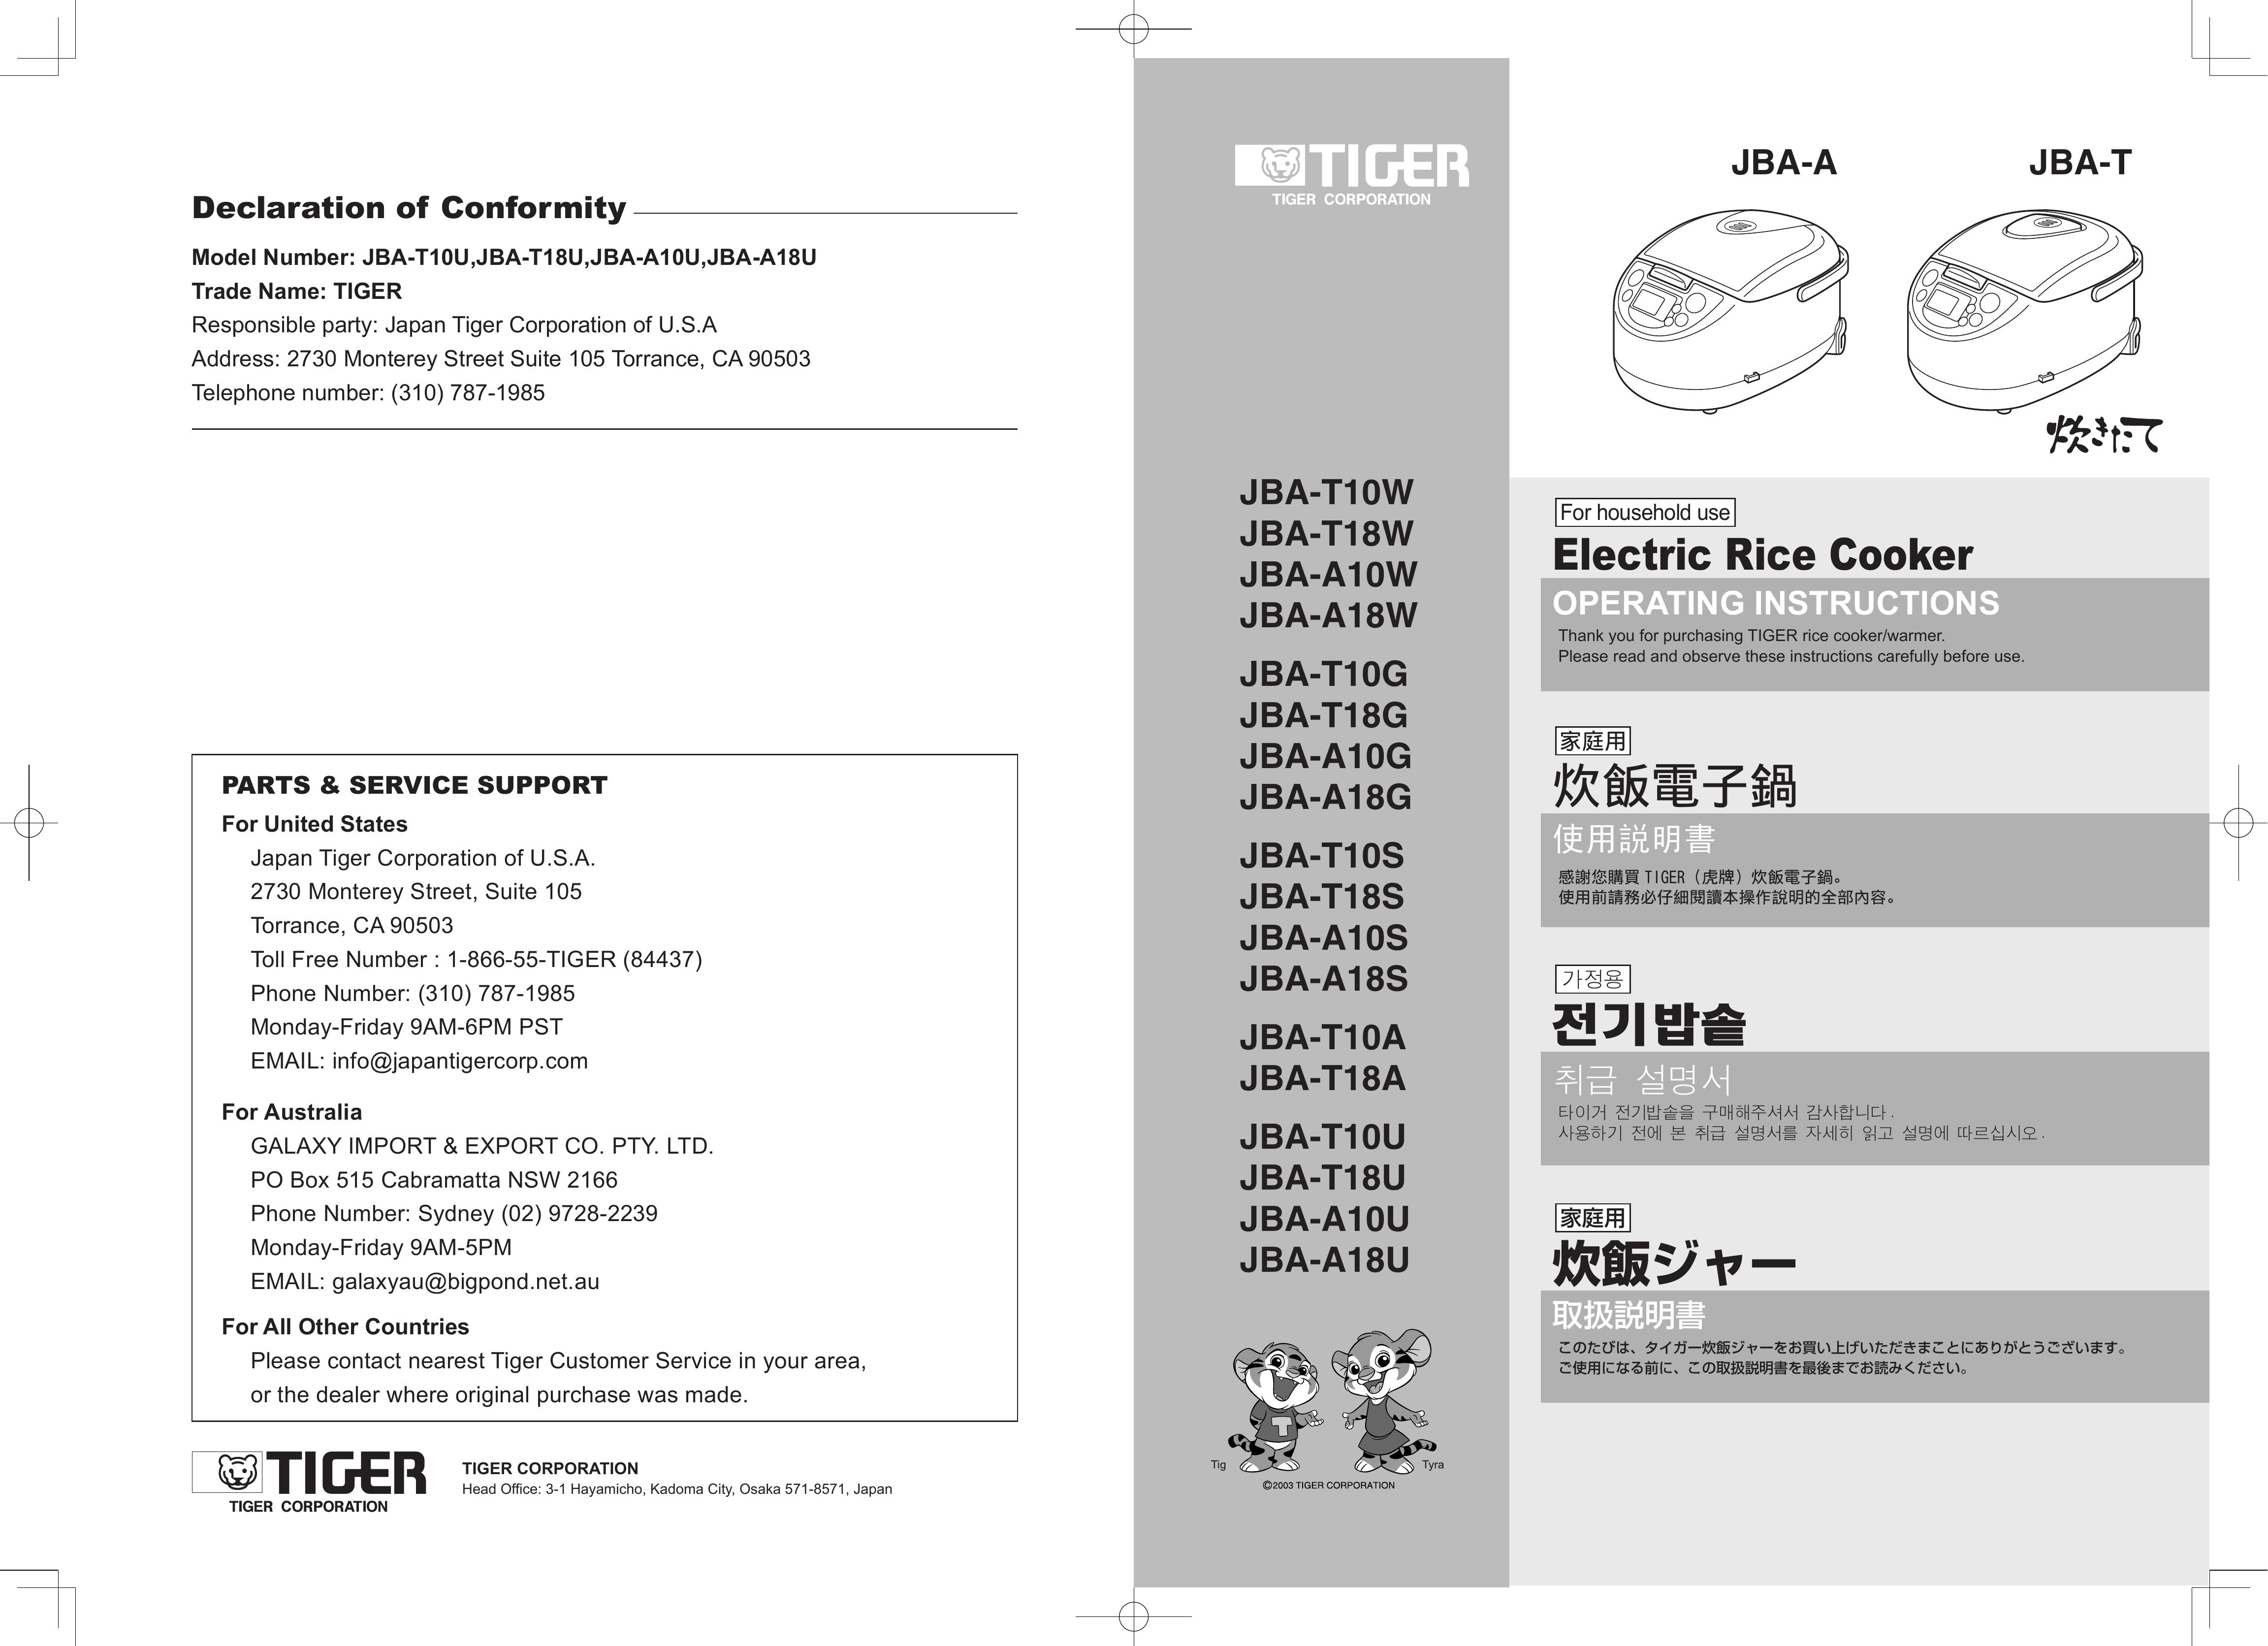 Tiger Products Co., Ltd JBA-T10G Rice Cooker User Manual